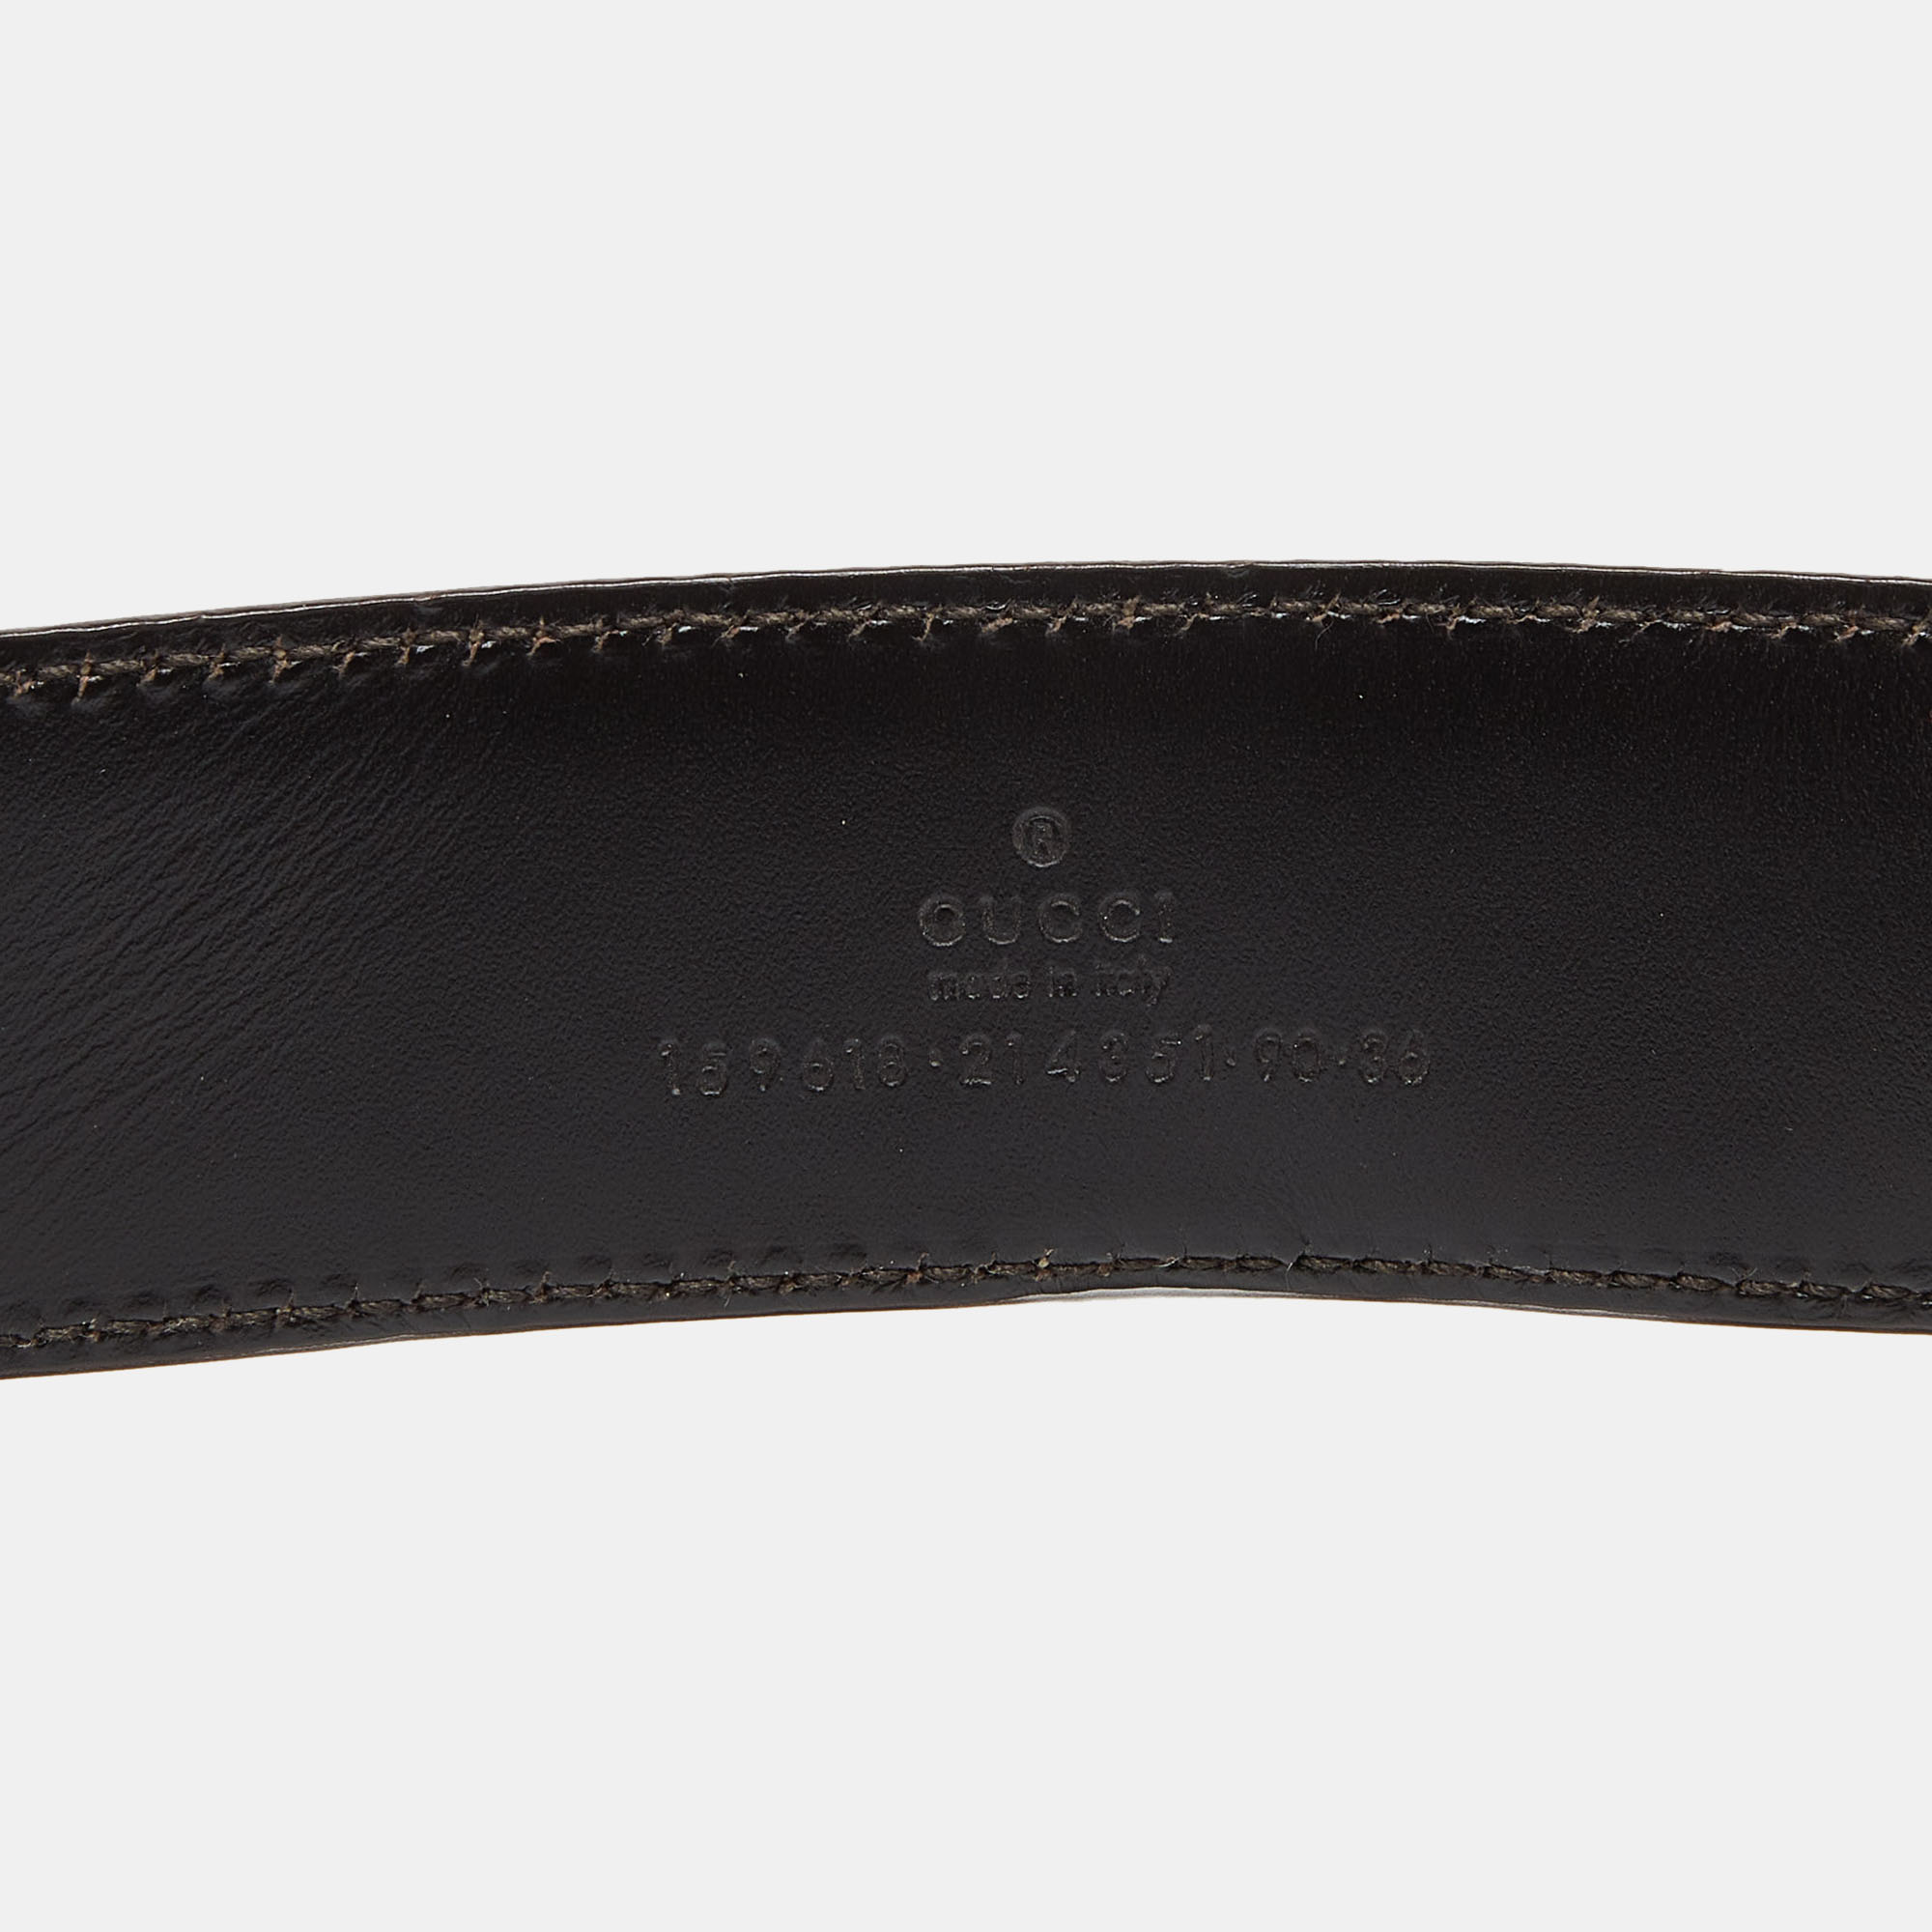 Gucci Beige Guccissima Leather Buckle Belt 90CM